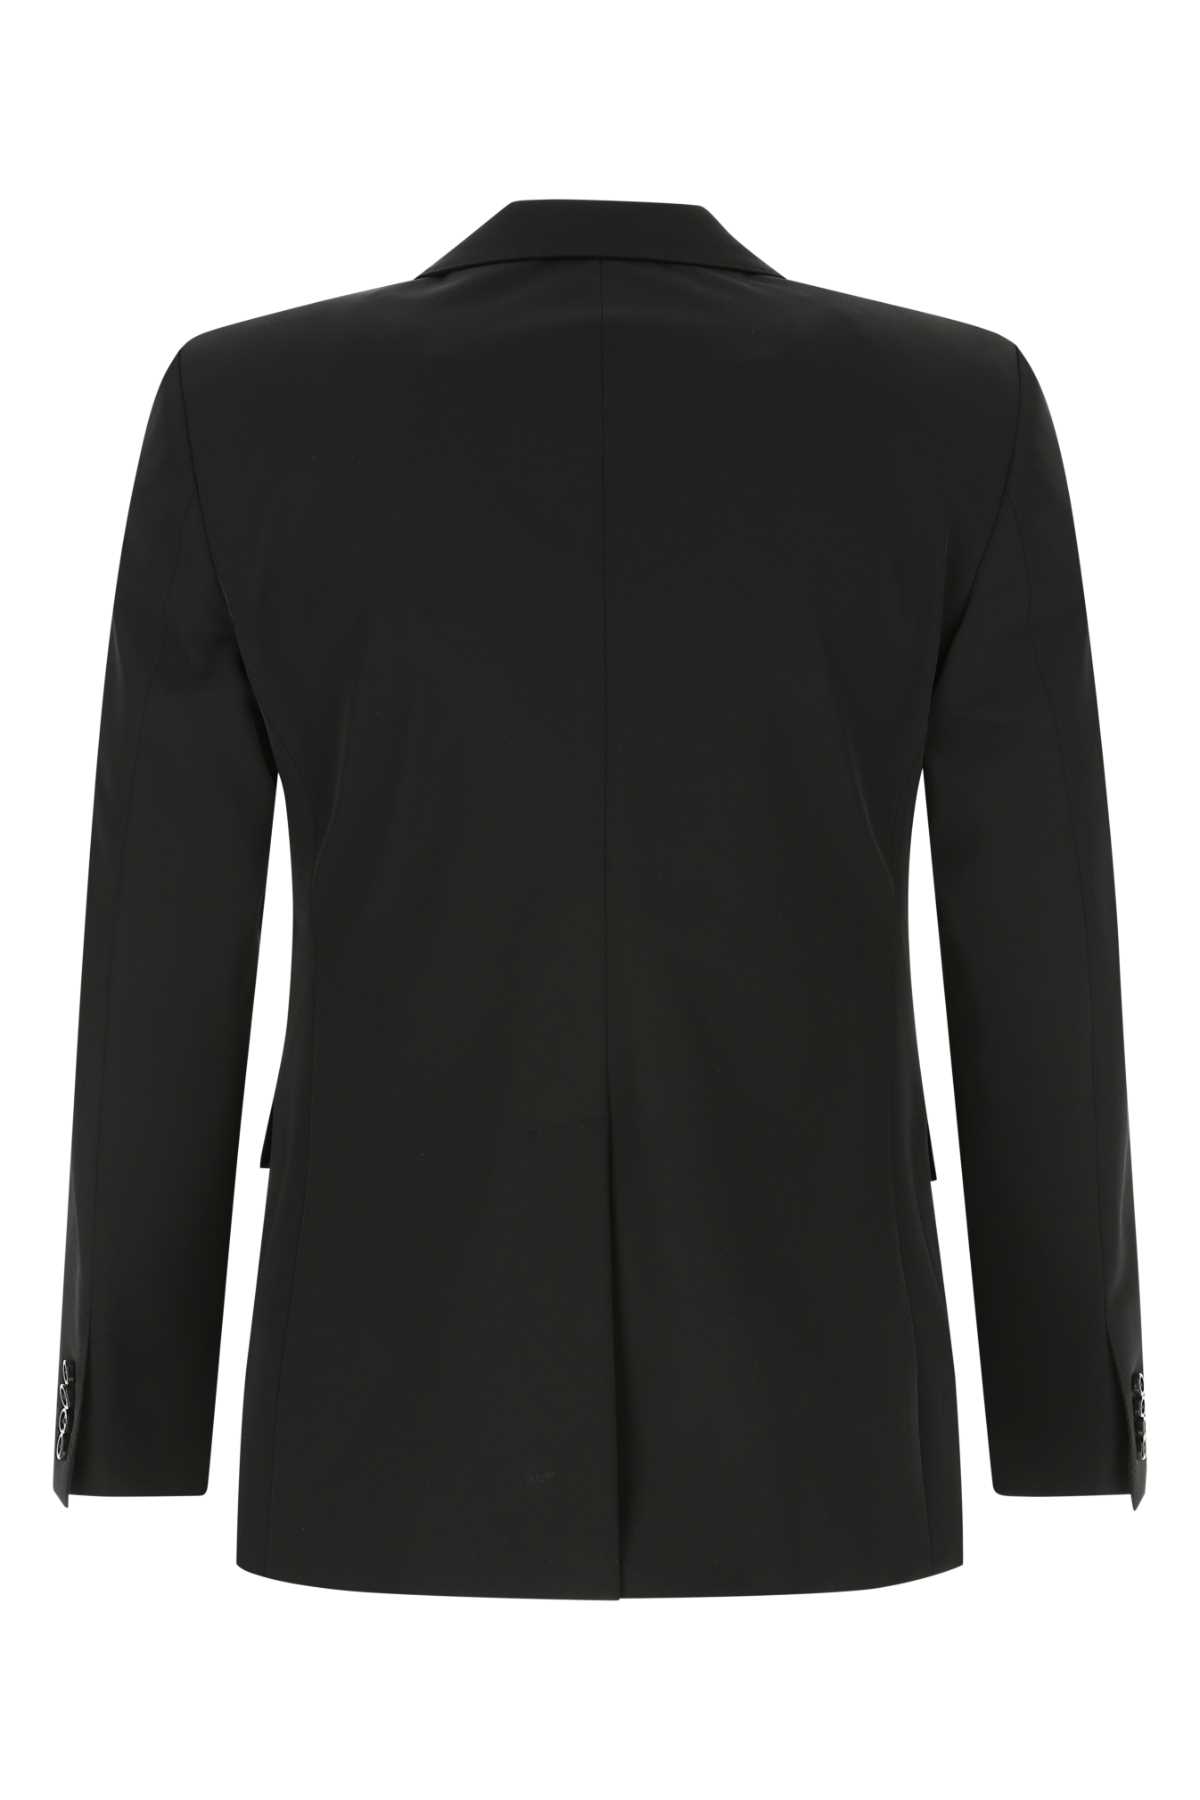 Dolce & Gabbana Black Stretch Polyester Blazer In N0000